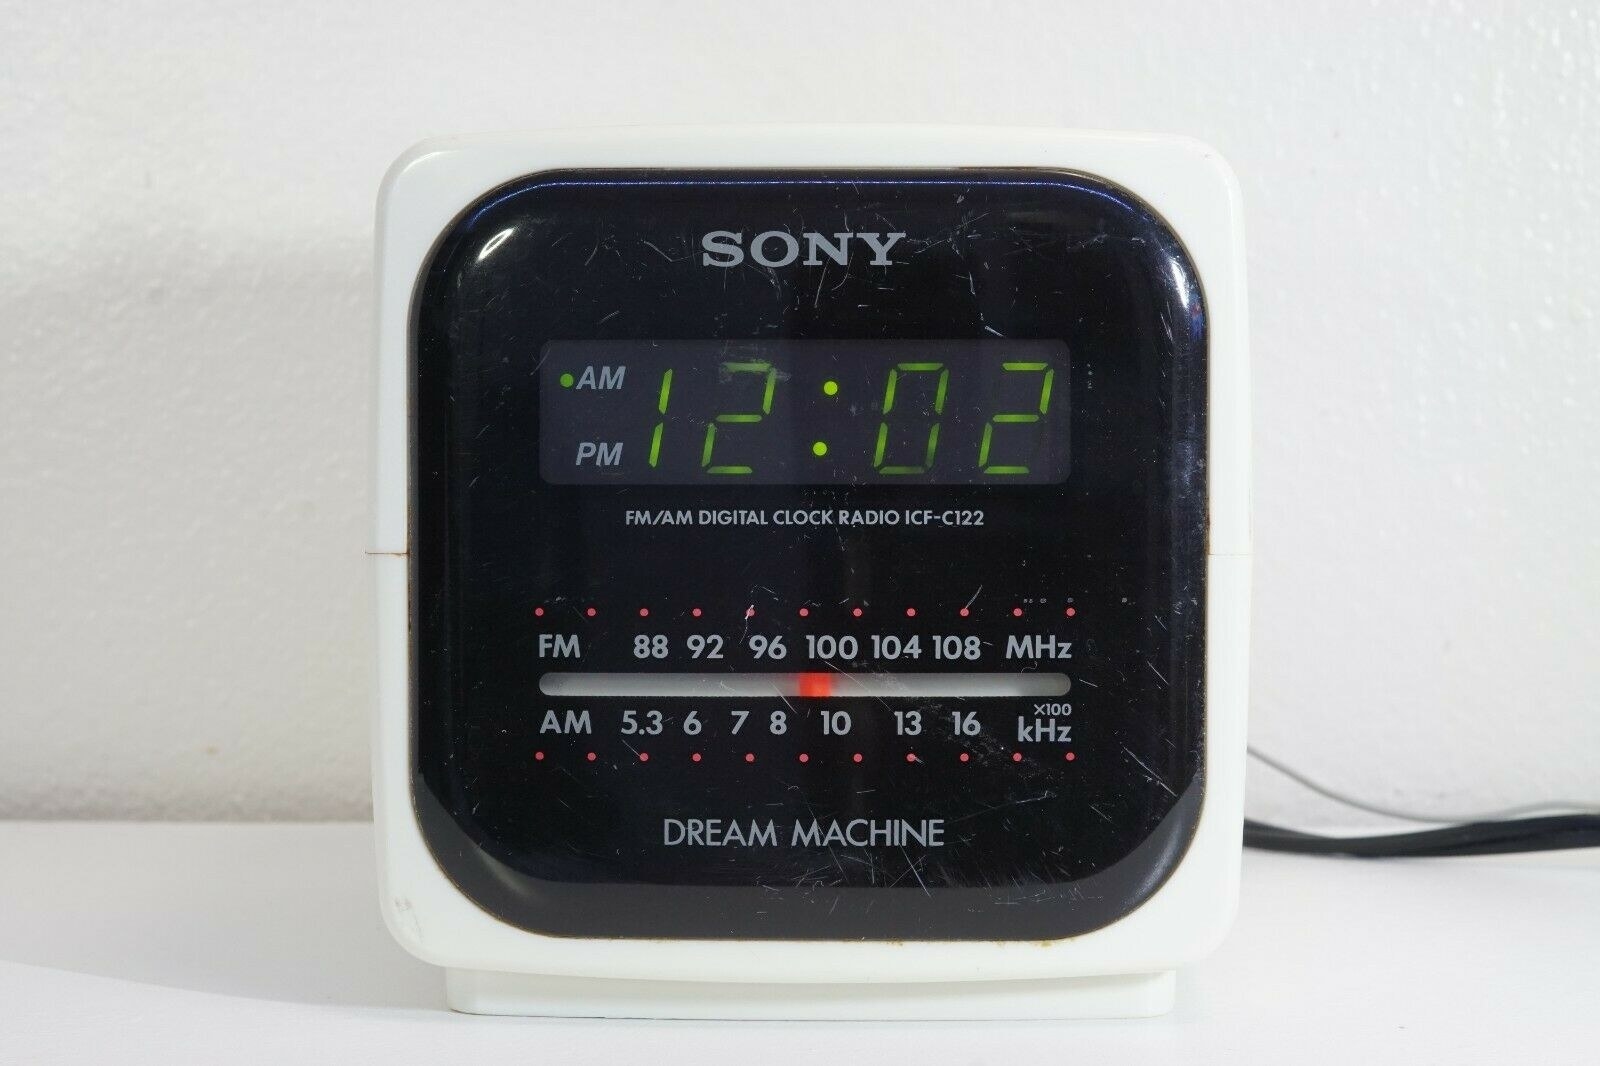 A white Sony Dream Machine radio alarm clock